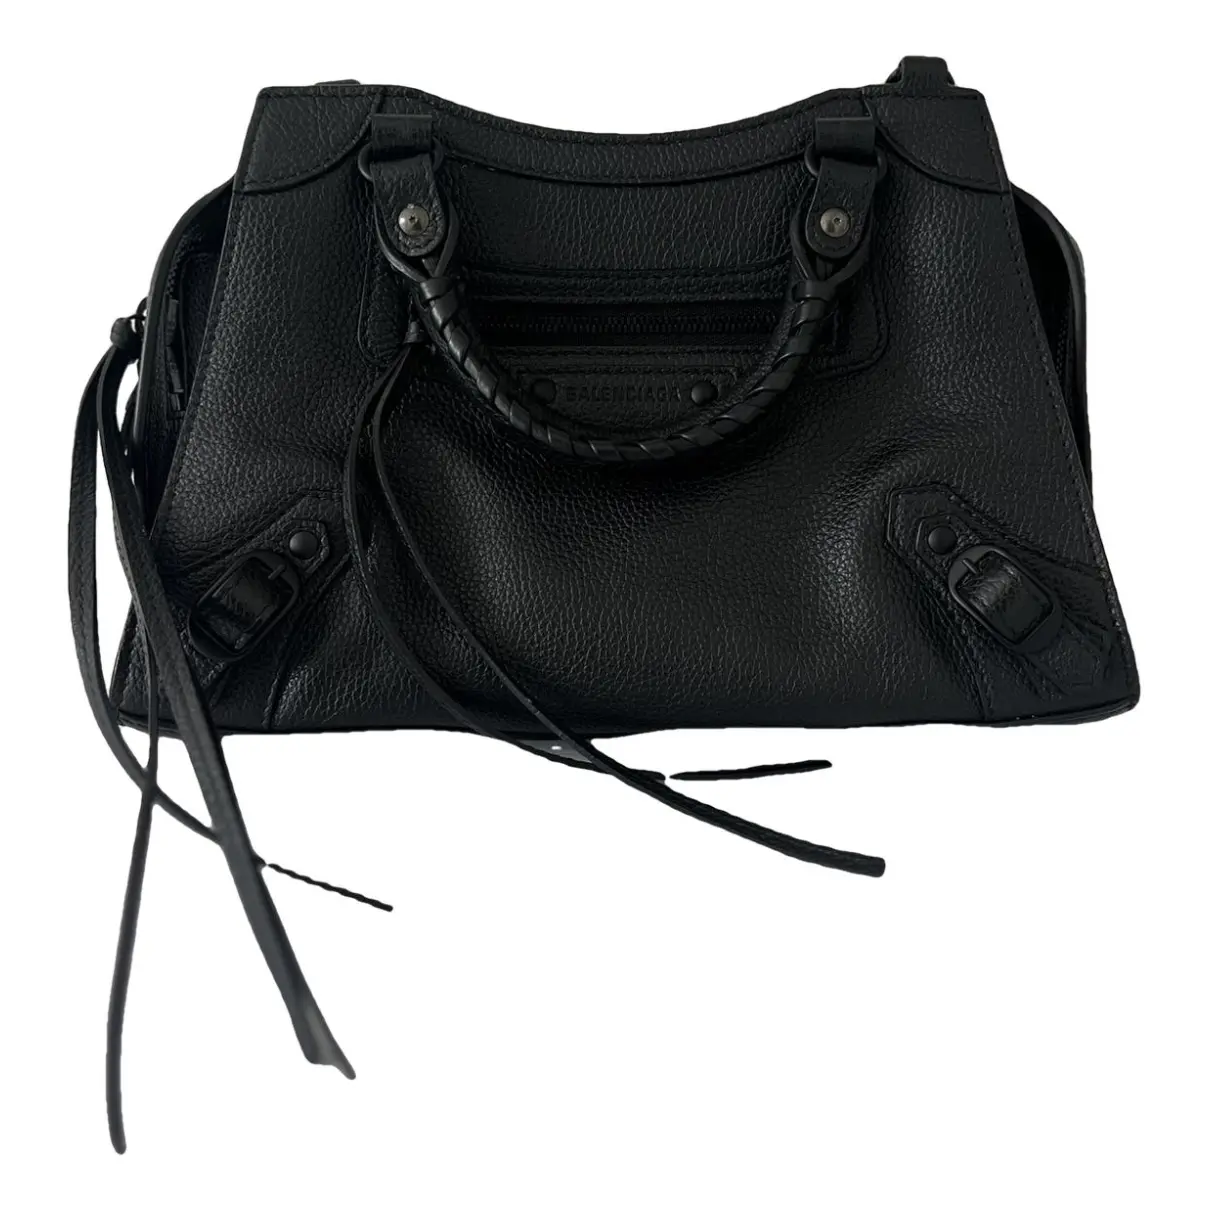 Neo Classic leather handbag